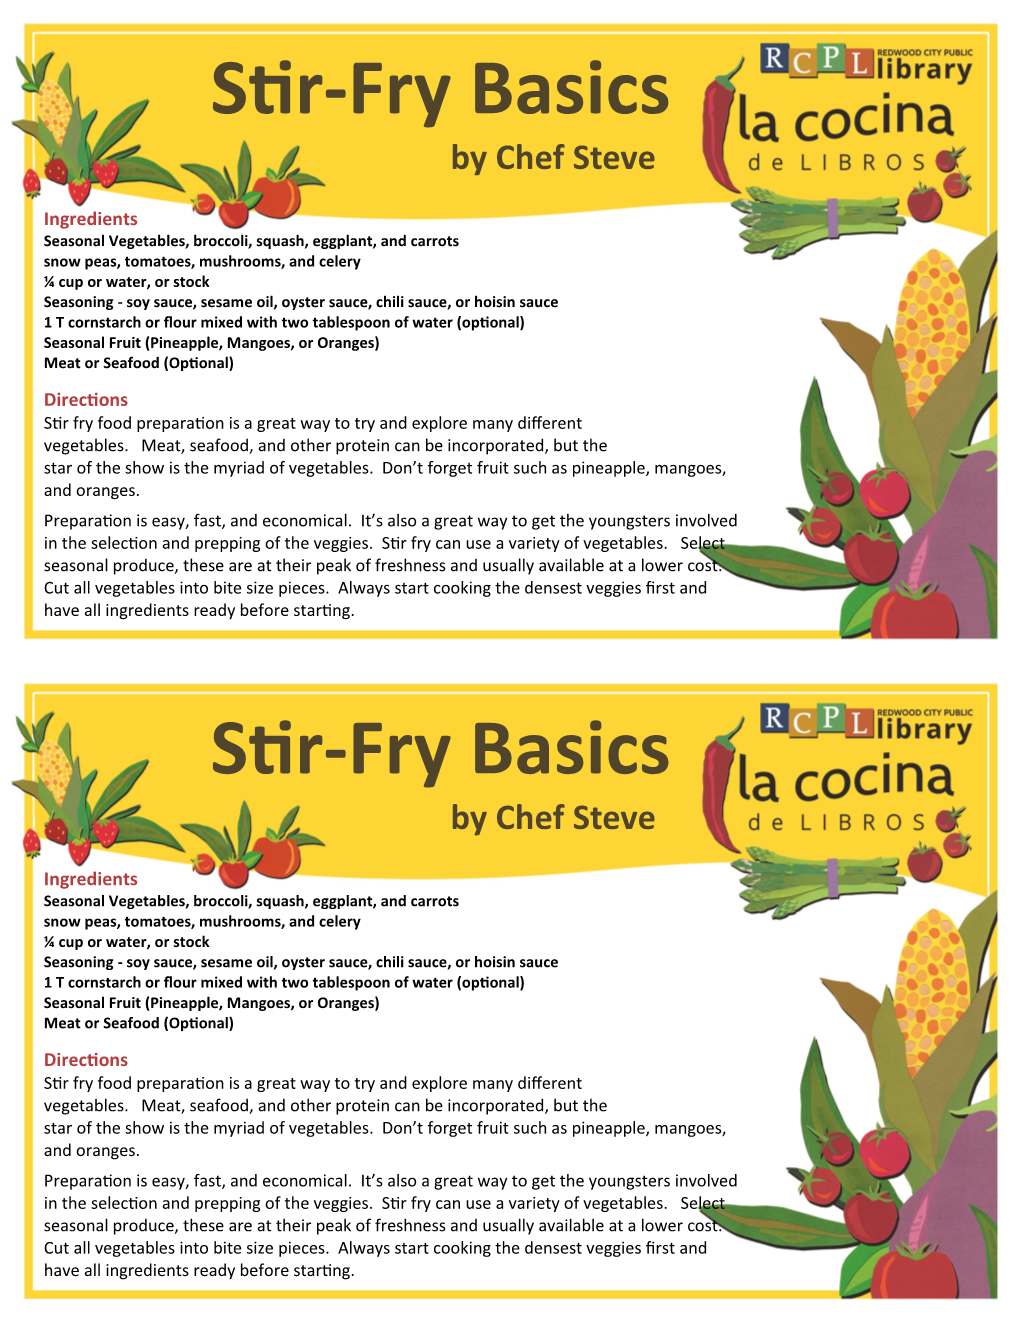 Stir-Fry Basics by Chef Steve